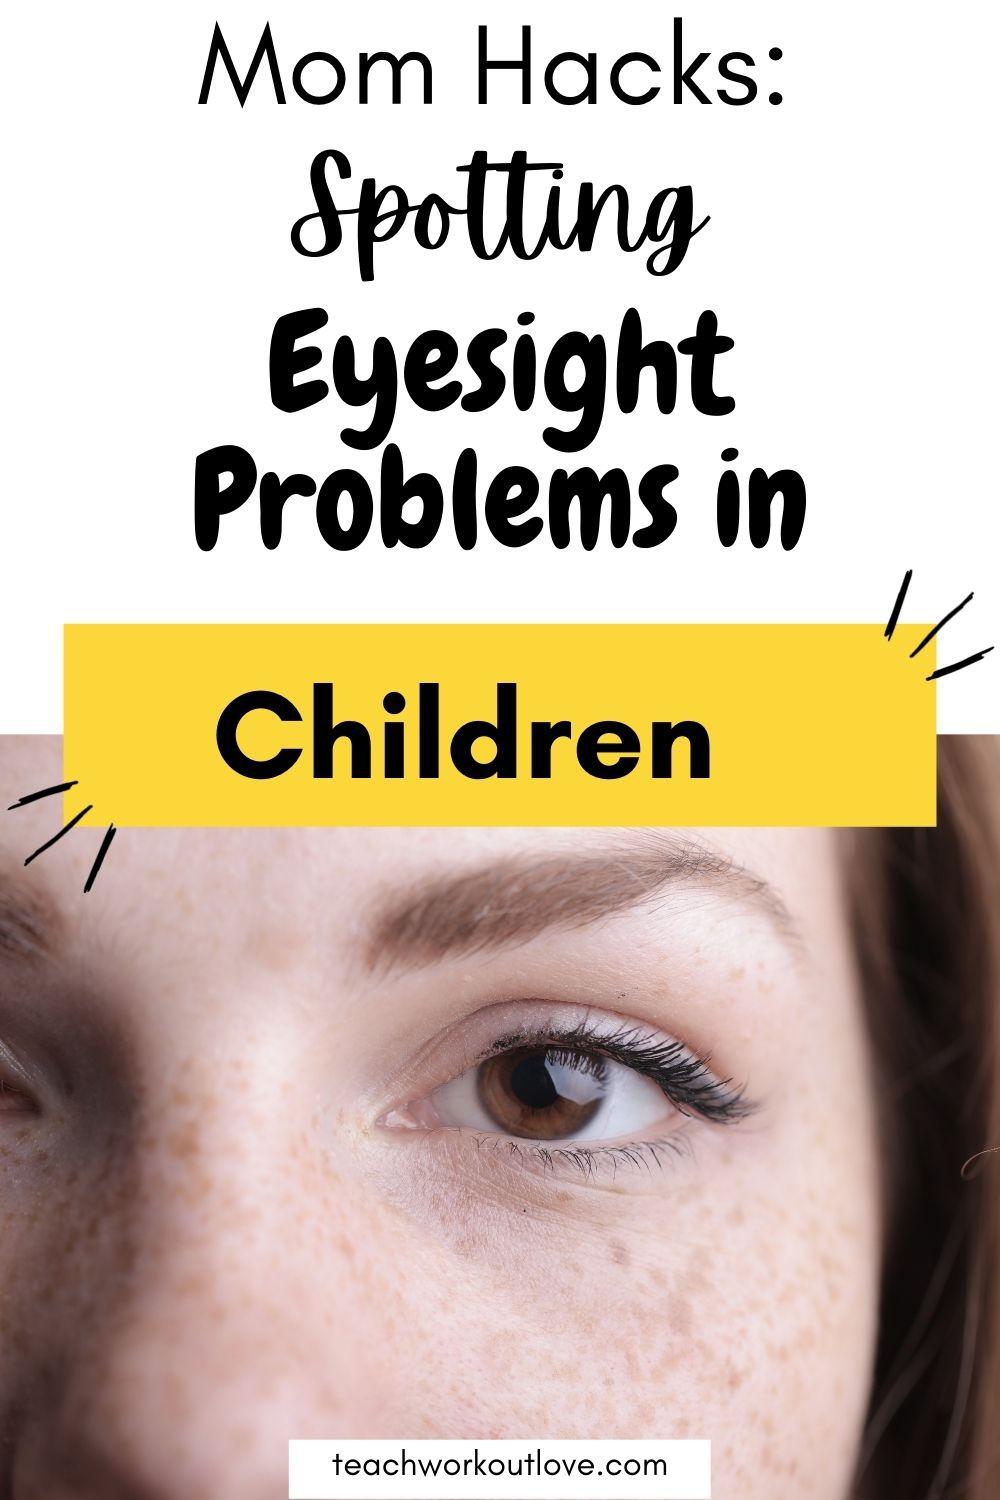 Mom Hacks Spotting Eyesight Problems in Children